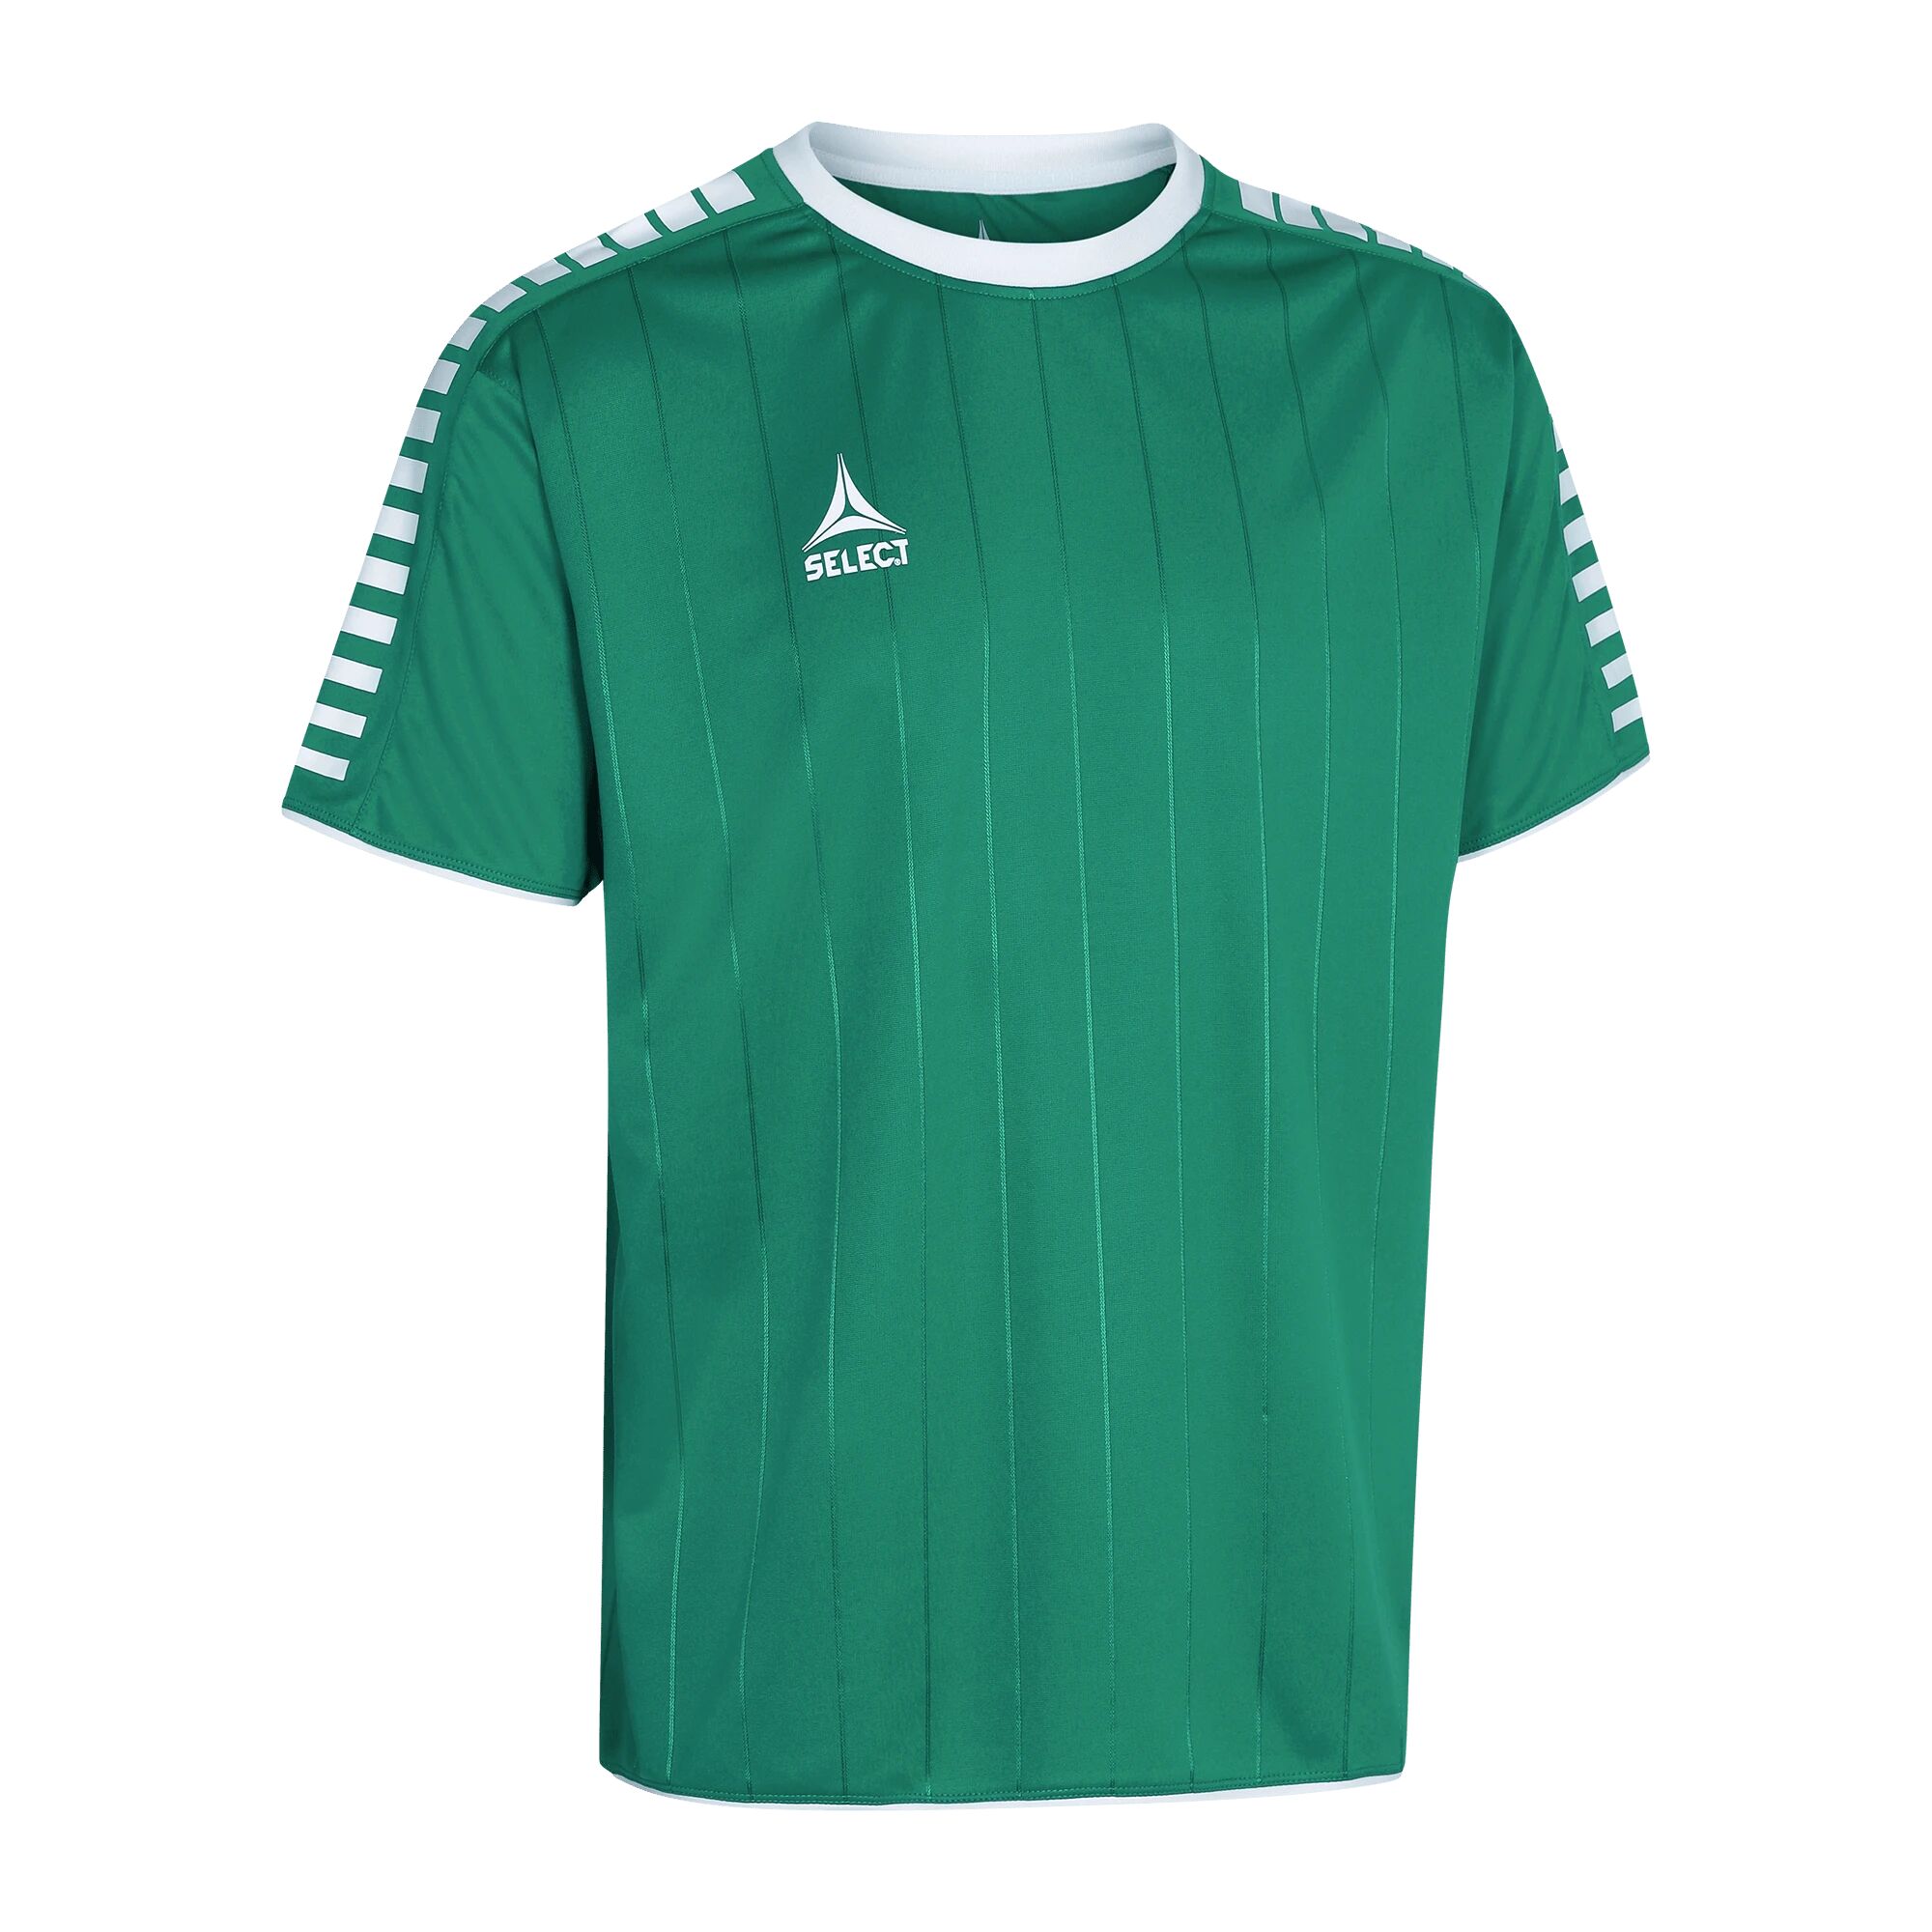 Select Player shirt S/S Argentina, fotballtrøye senior XXXL Green